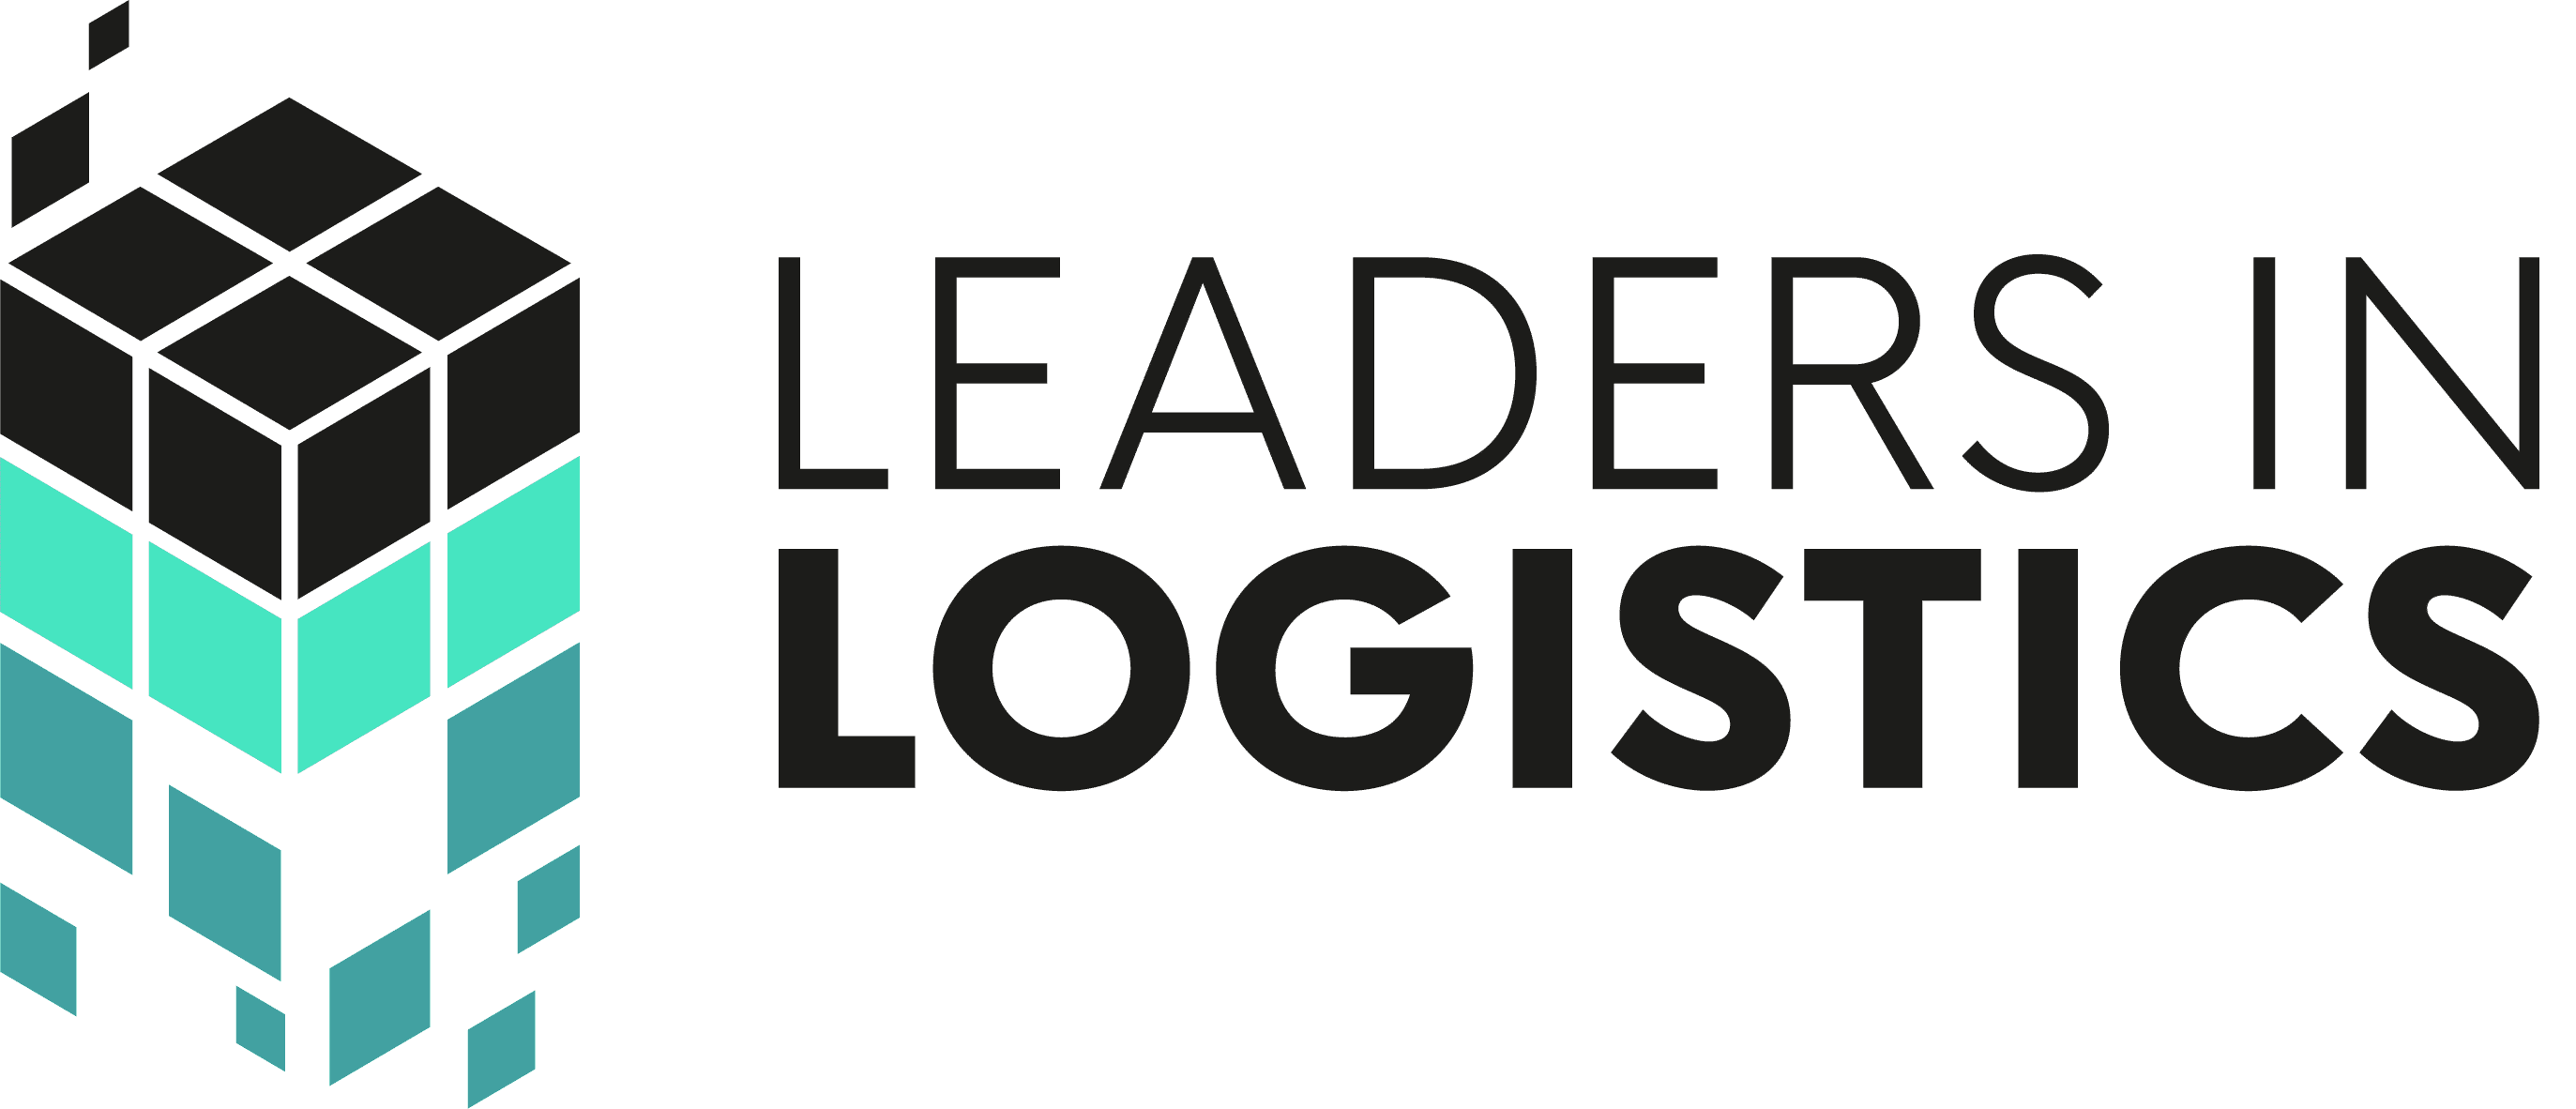 Leaders in Logistics